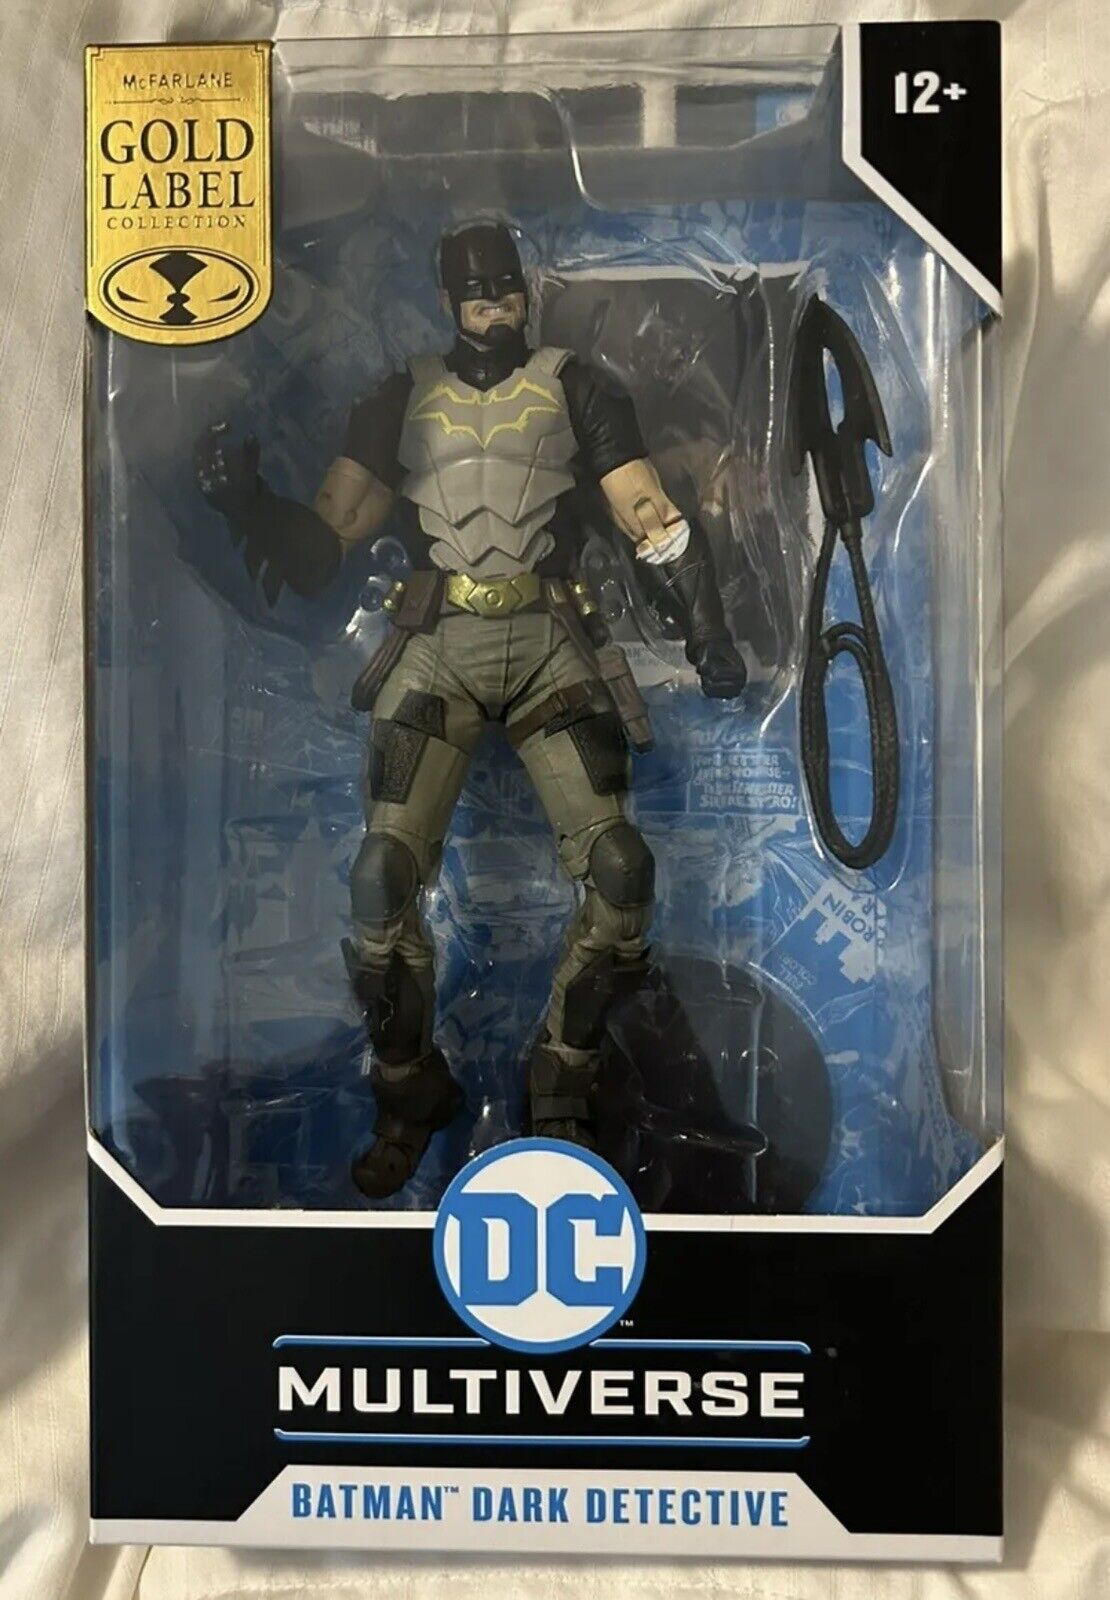 McFarlane DC Universe Batman Dark Detective Gold Label 7" Action Figure - New